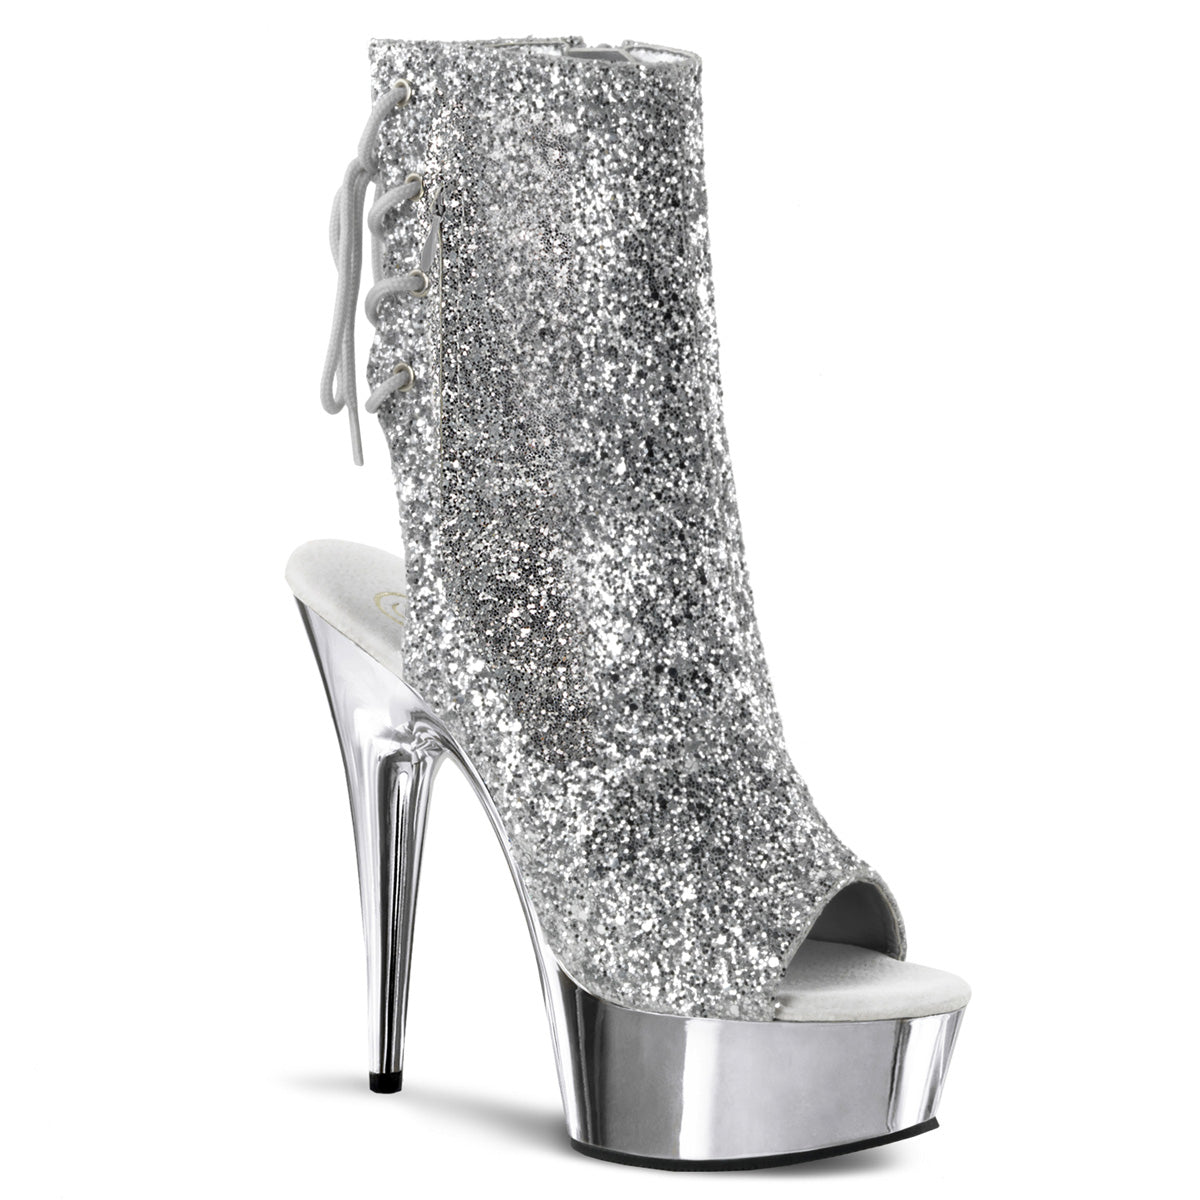 DELIGHT-1018G 6" Heel Silver Glitter  Stripper Platforms High Heels